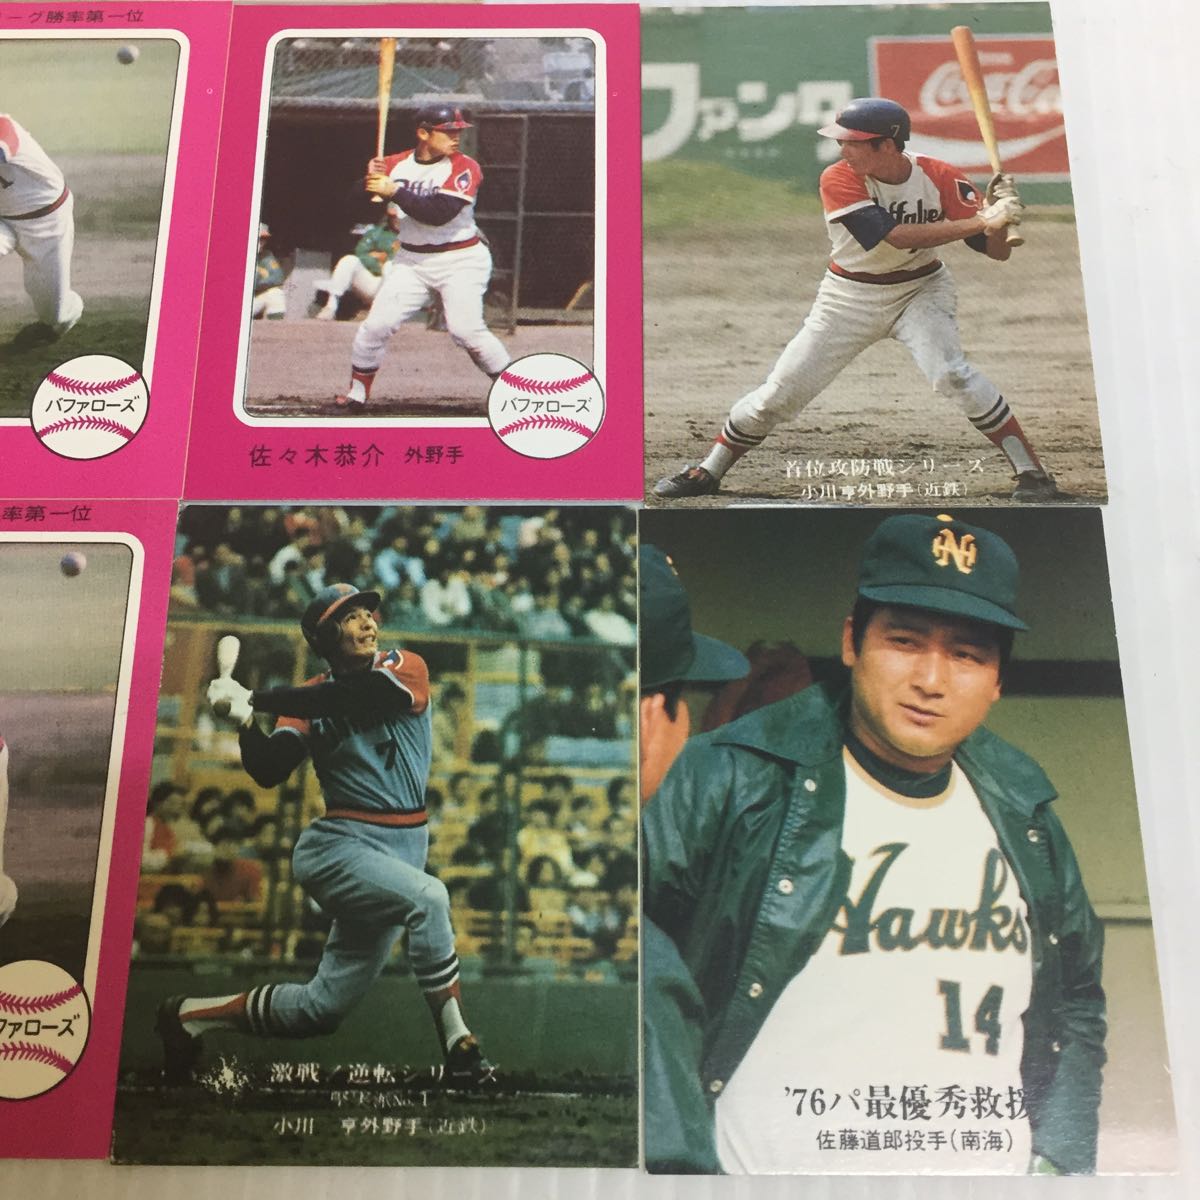  Calbee * Professional Baseball card ⑤* close iron * Ogawa / Suzuki other * southern sea * Sato / Emoto other *used KT***